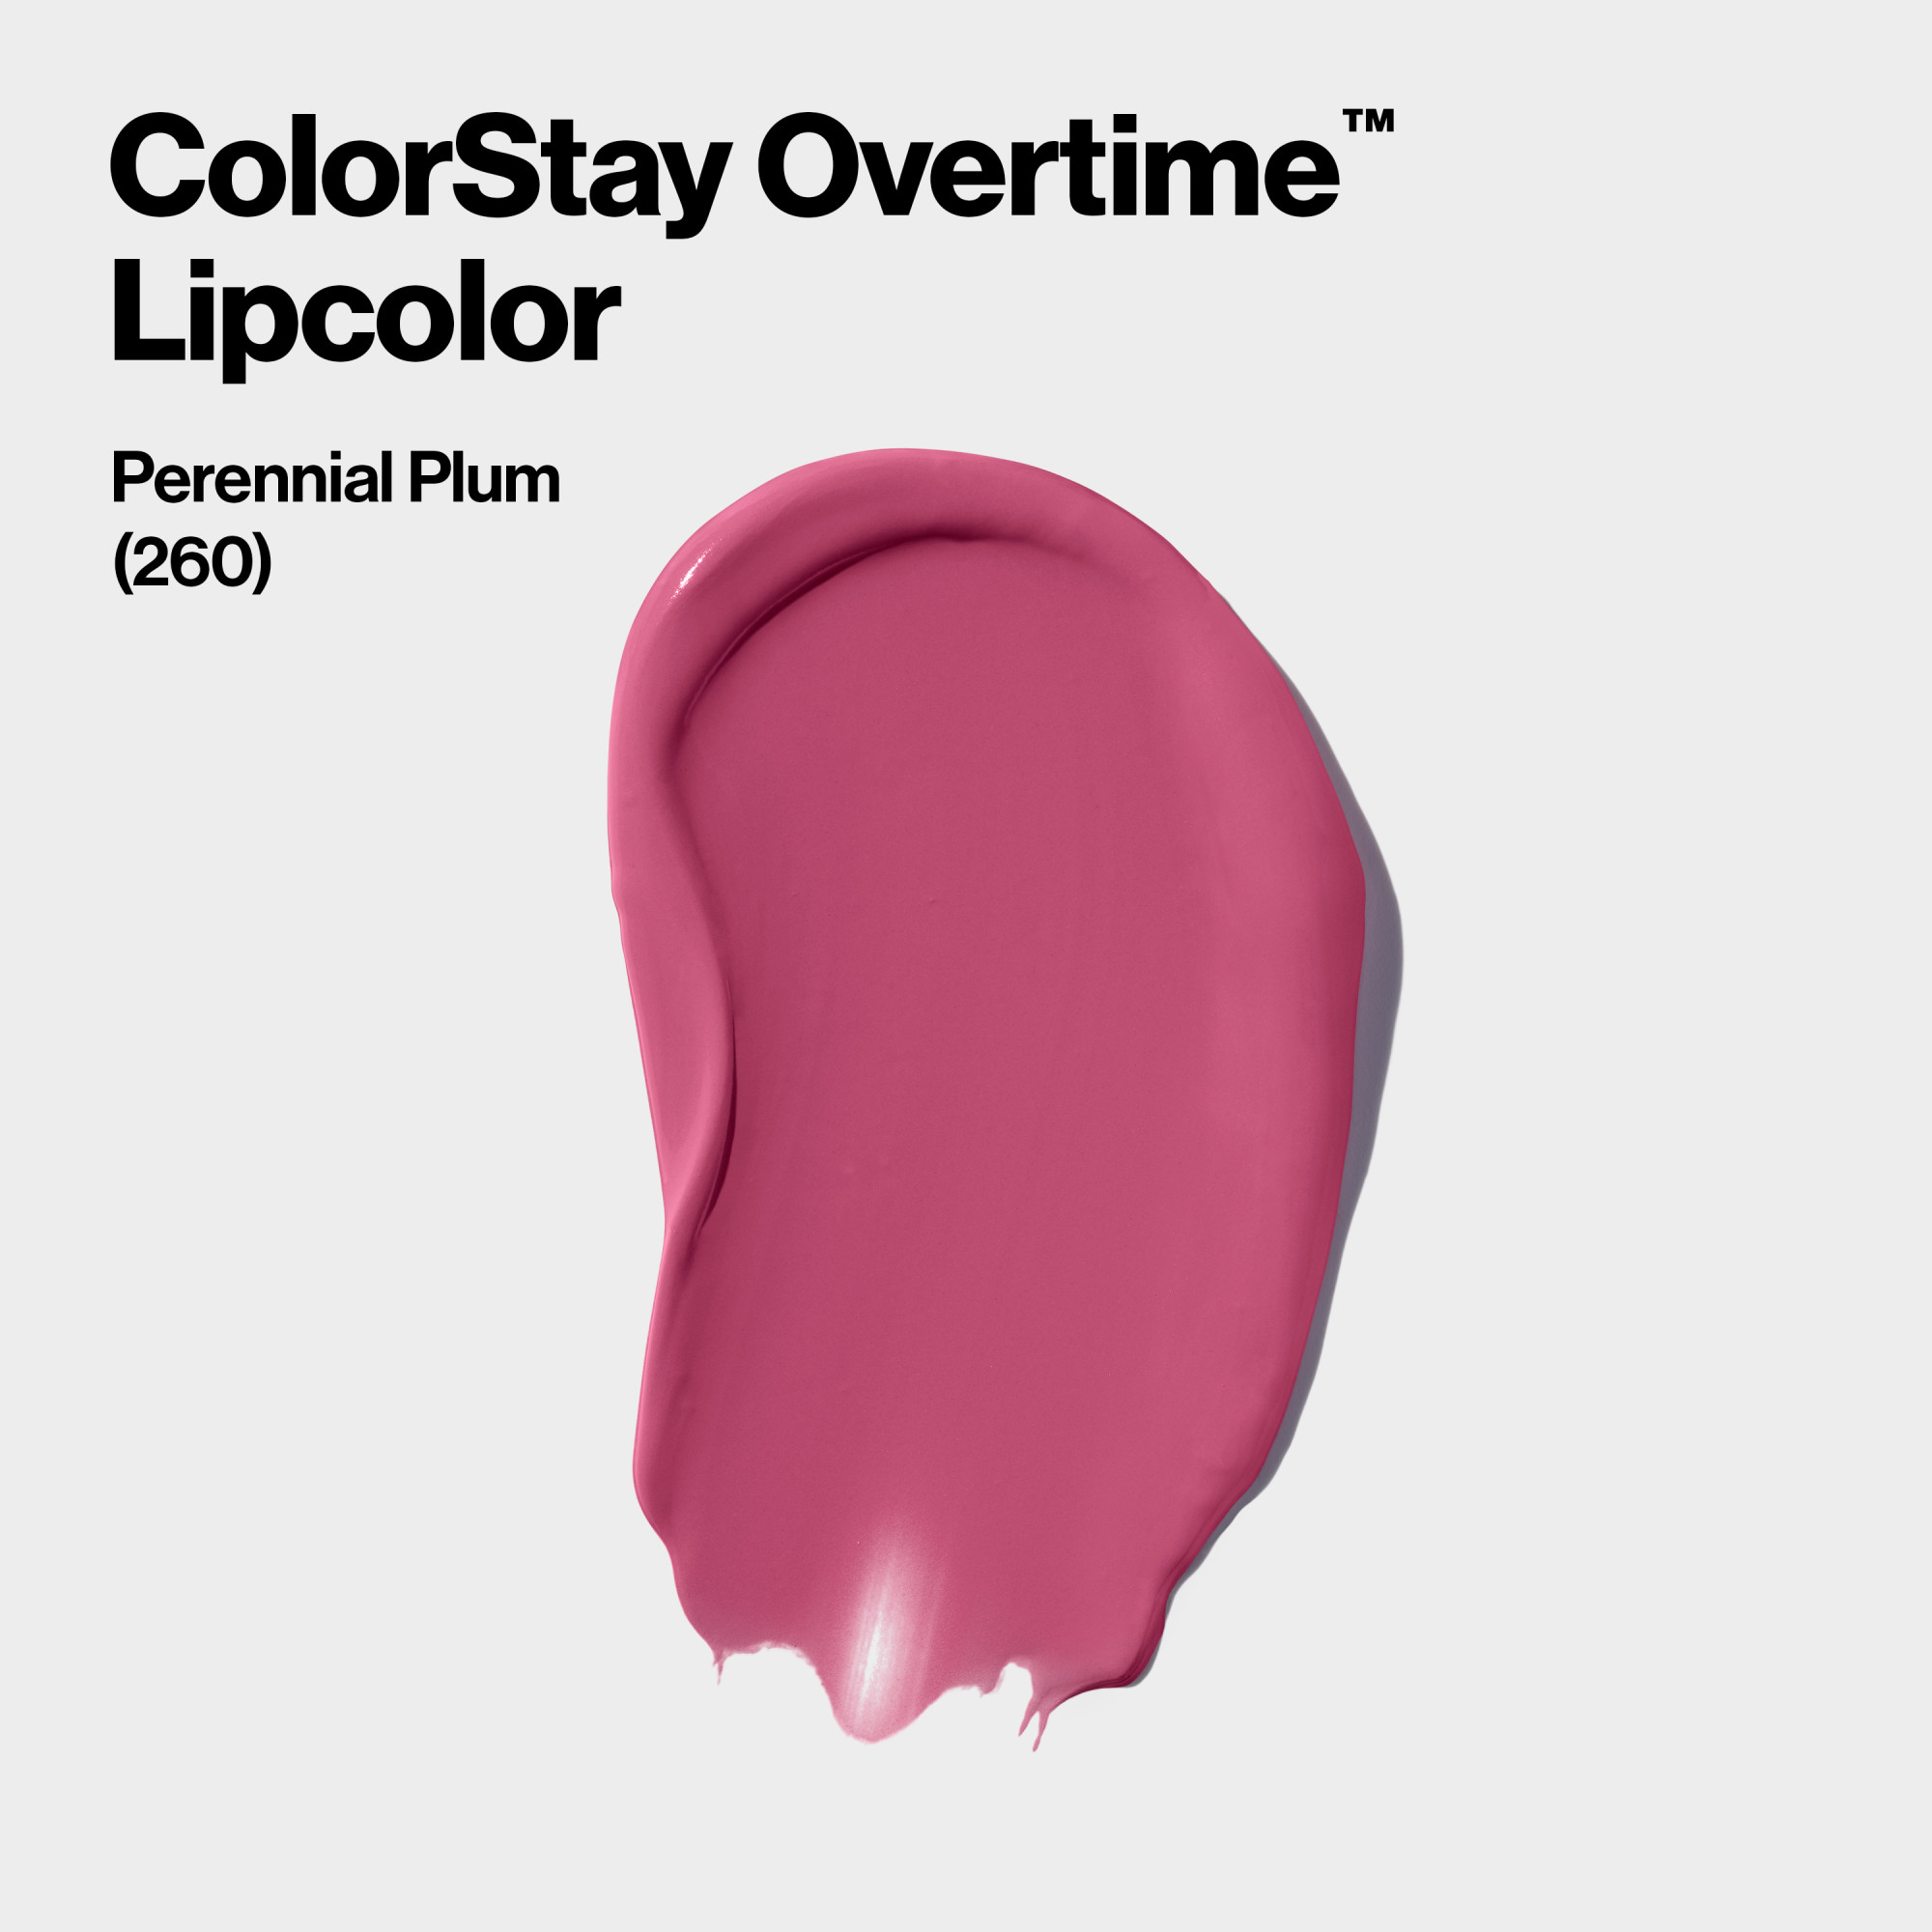 Revlon ColorStay Overtime Longwearing Gloss Lipstick with Vitamin E, 260 Perennial Plum, 0.07 fl oz - image 3 of 8